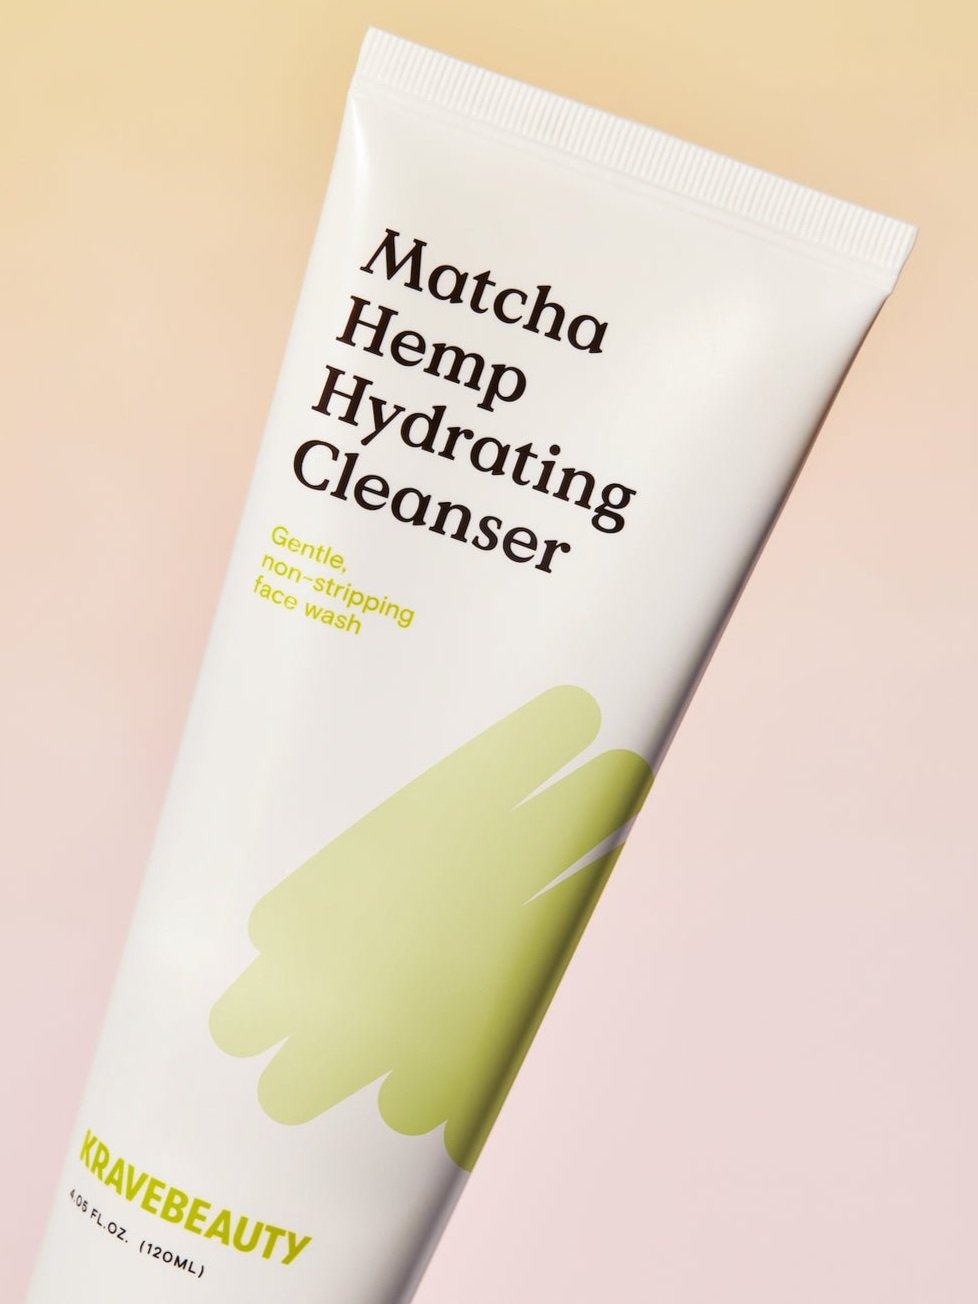 KraveBeauty Matcha Hemp Hydrating Cleanser